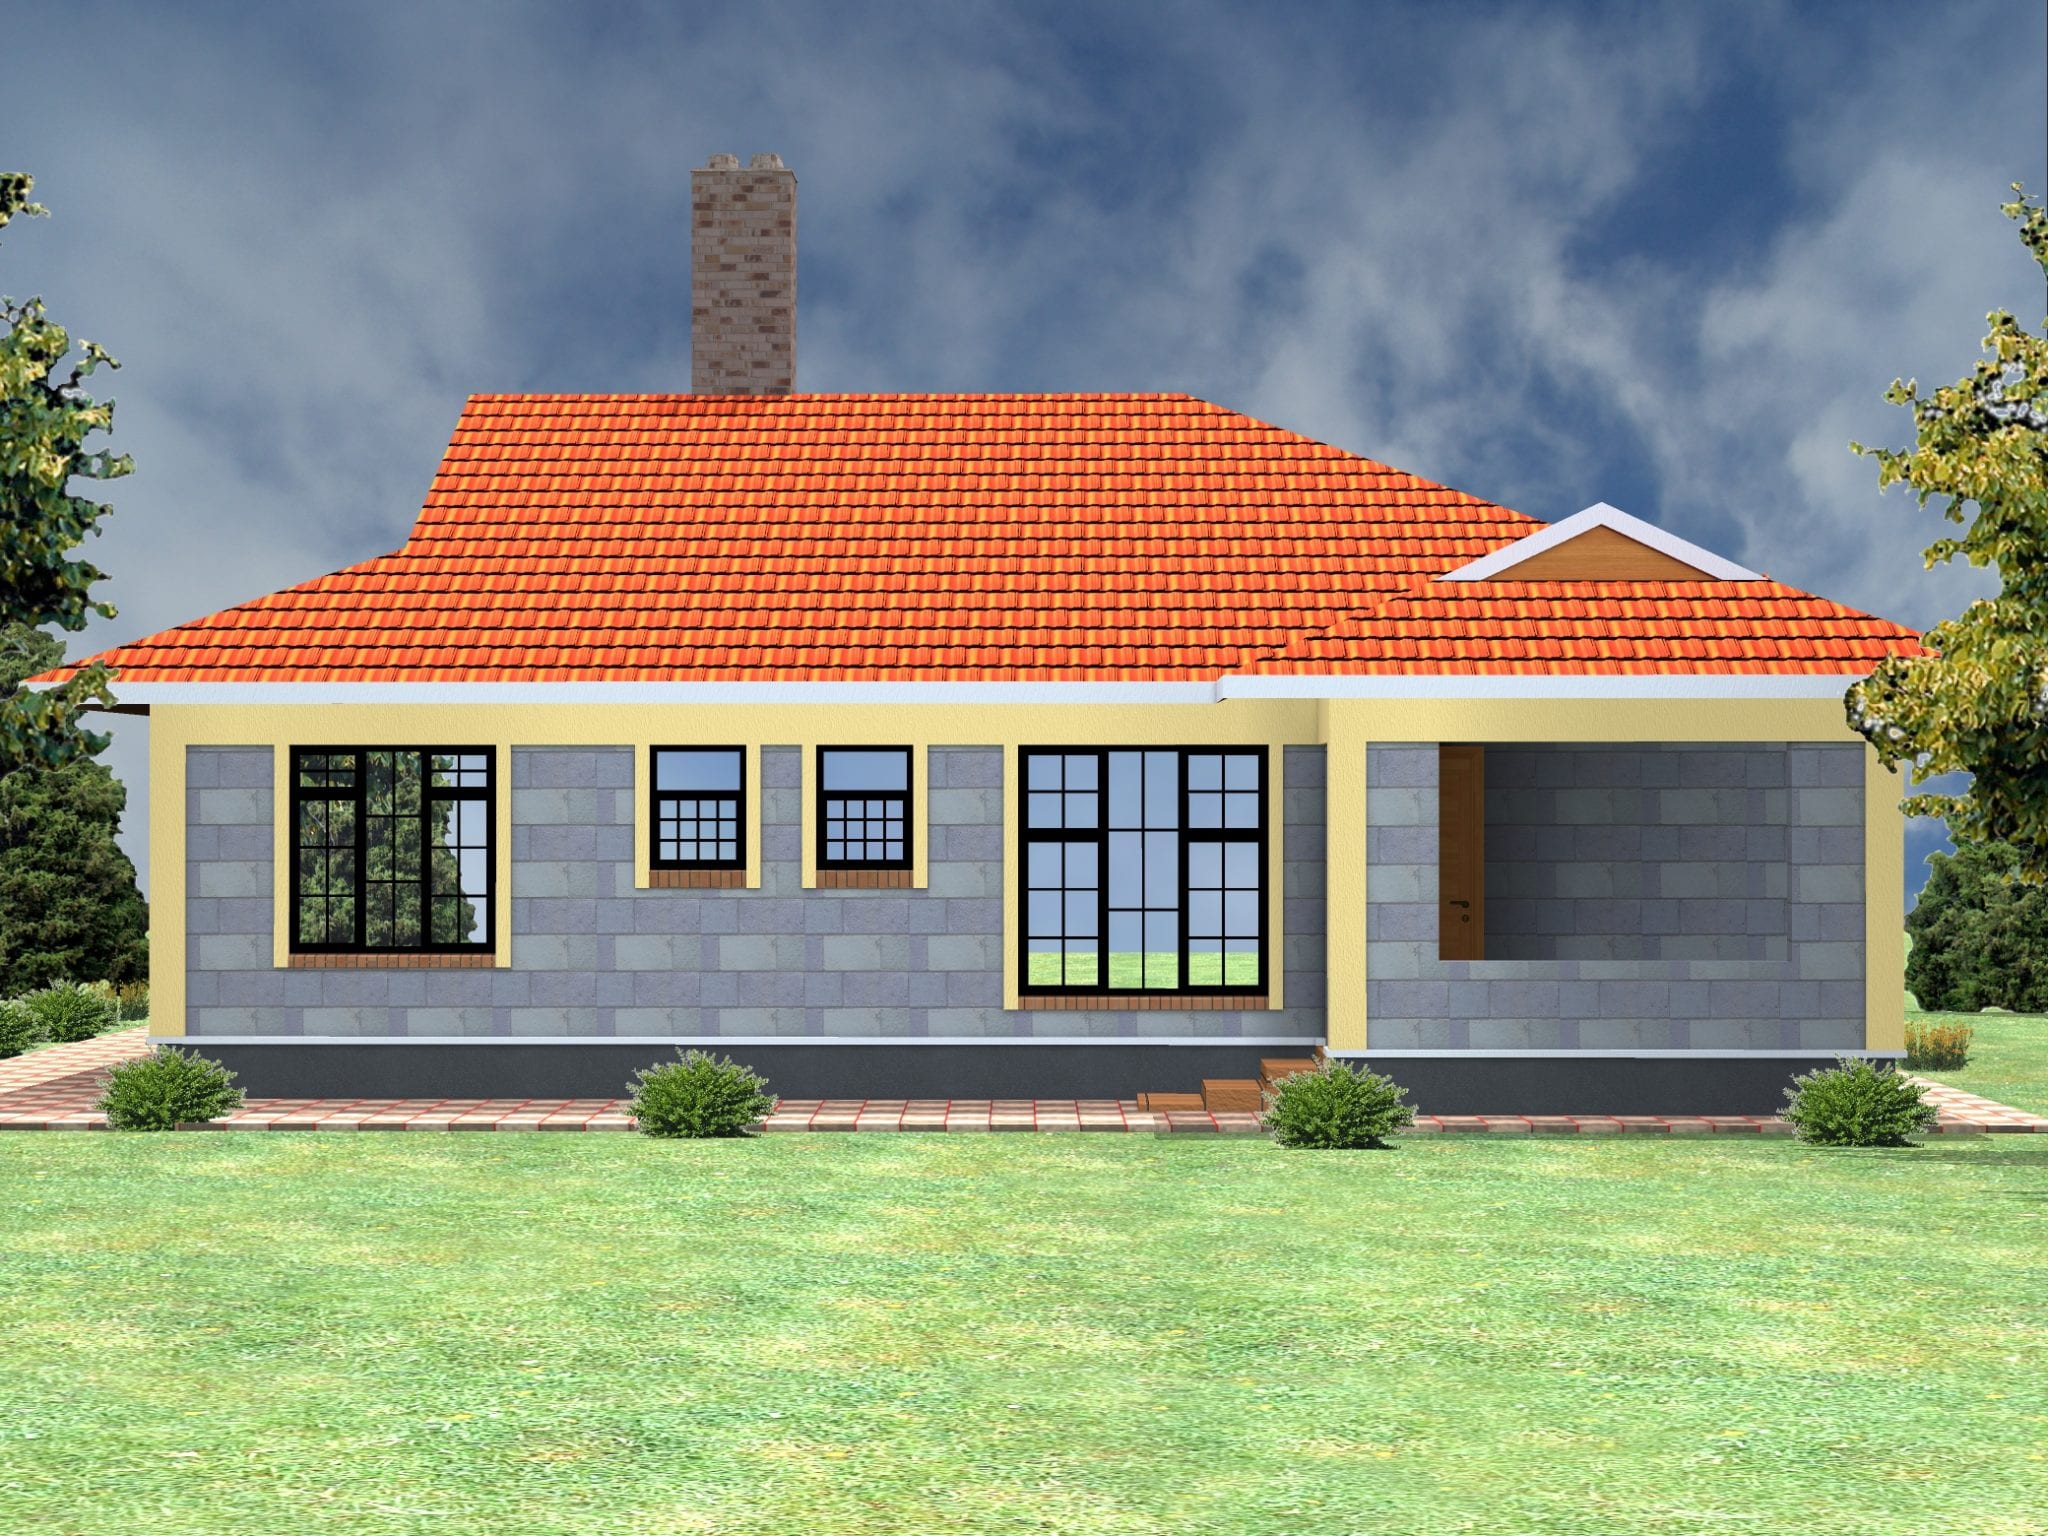 3 bedroom house plans in kenya pdf |HPD Consult